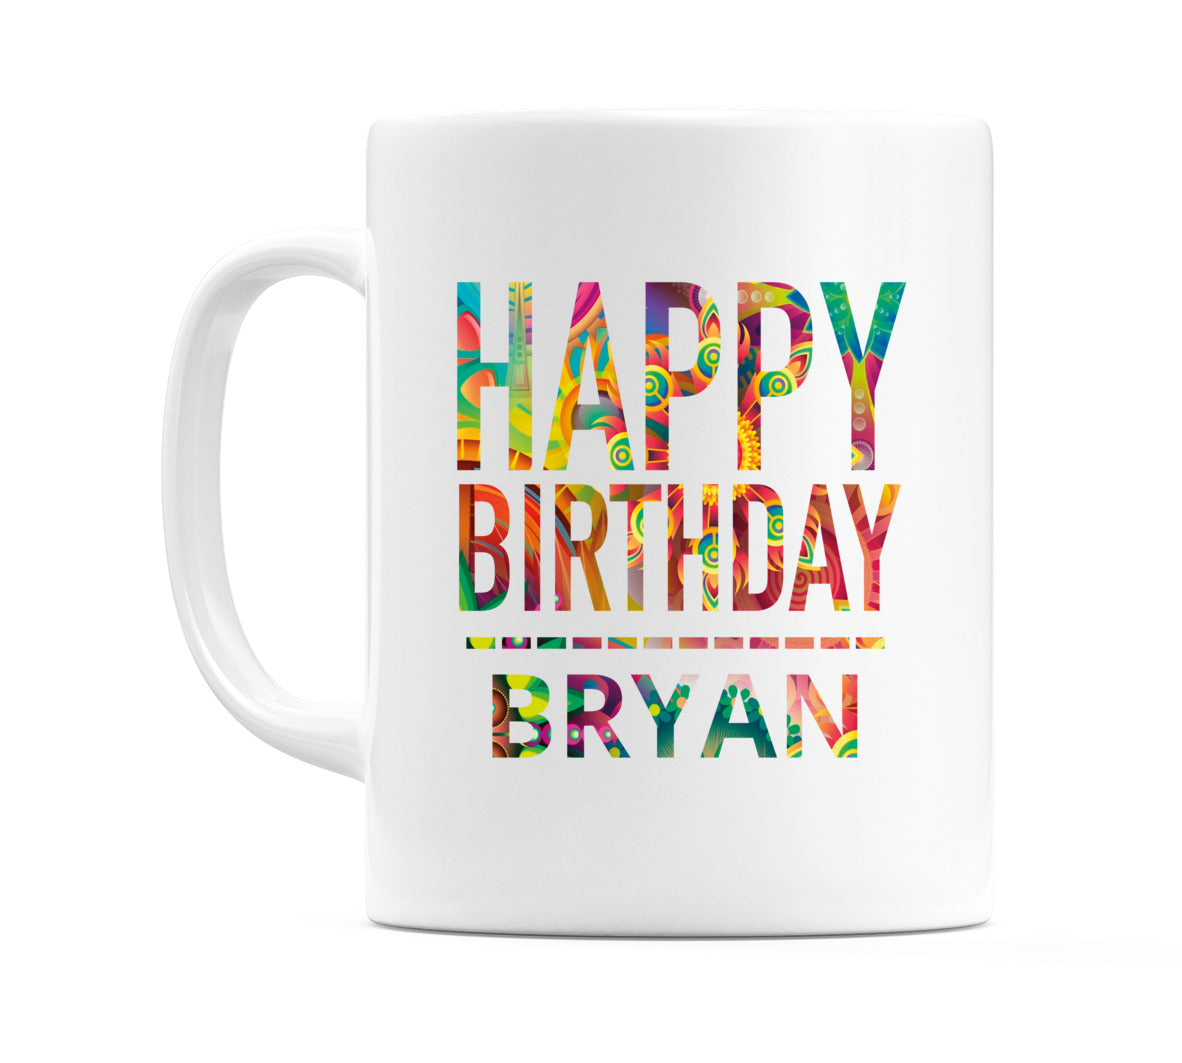 Happy Birthday Bryan (Tie Dye Effect) Mug Cup by WeDoMugs